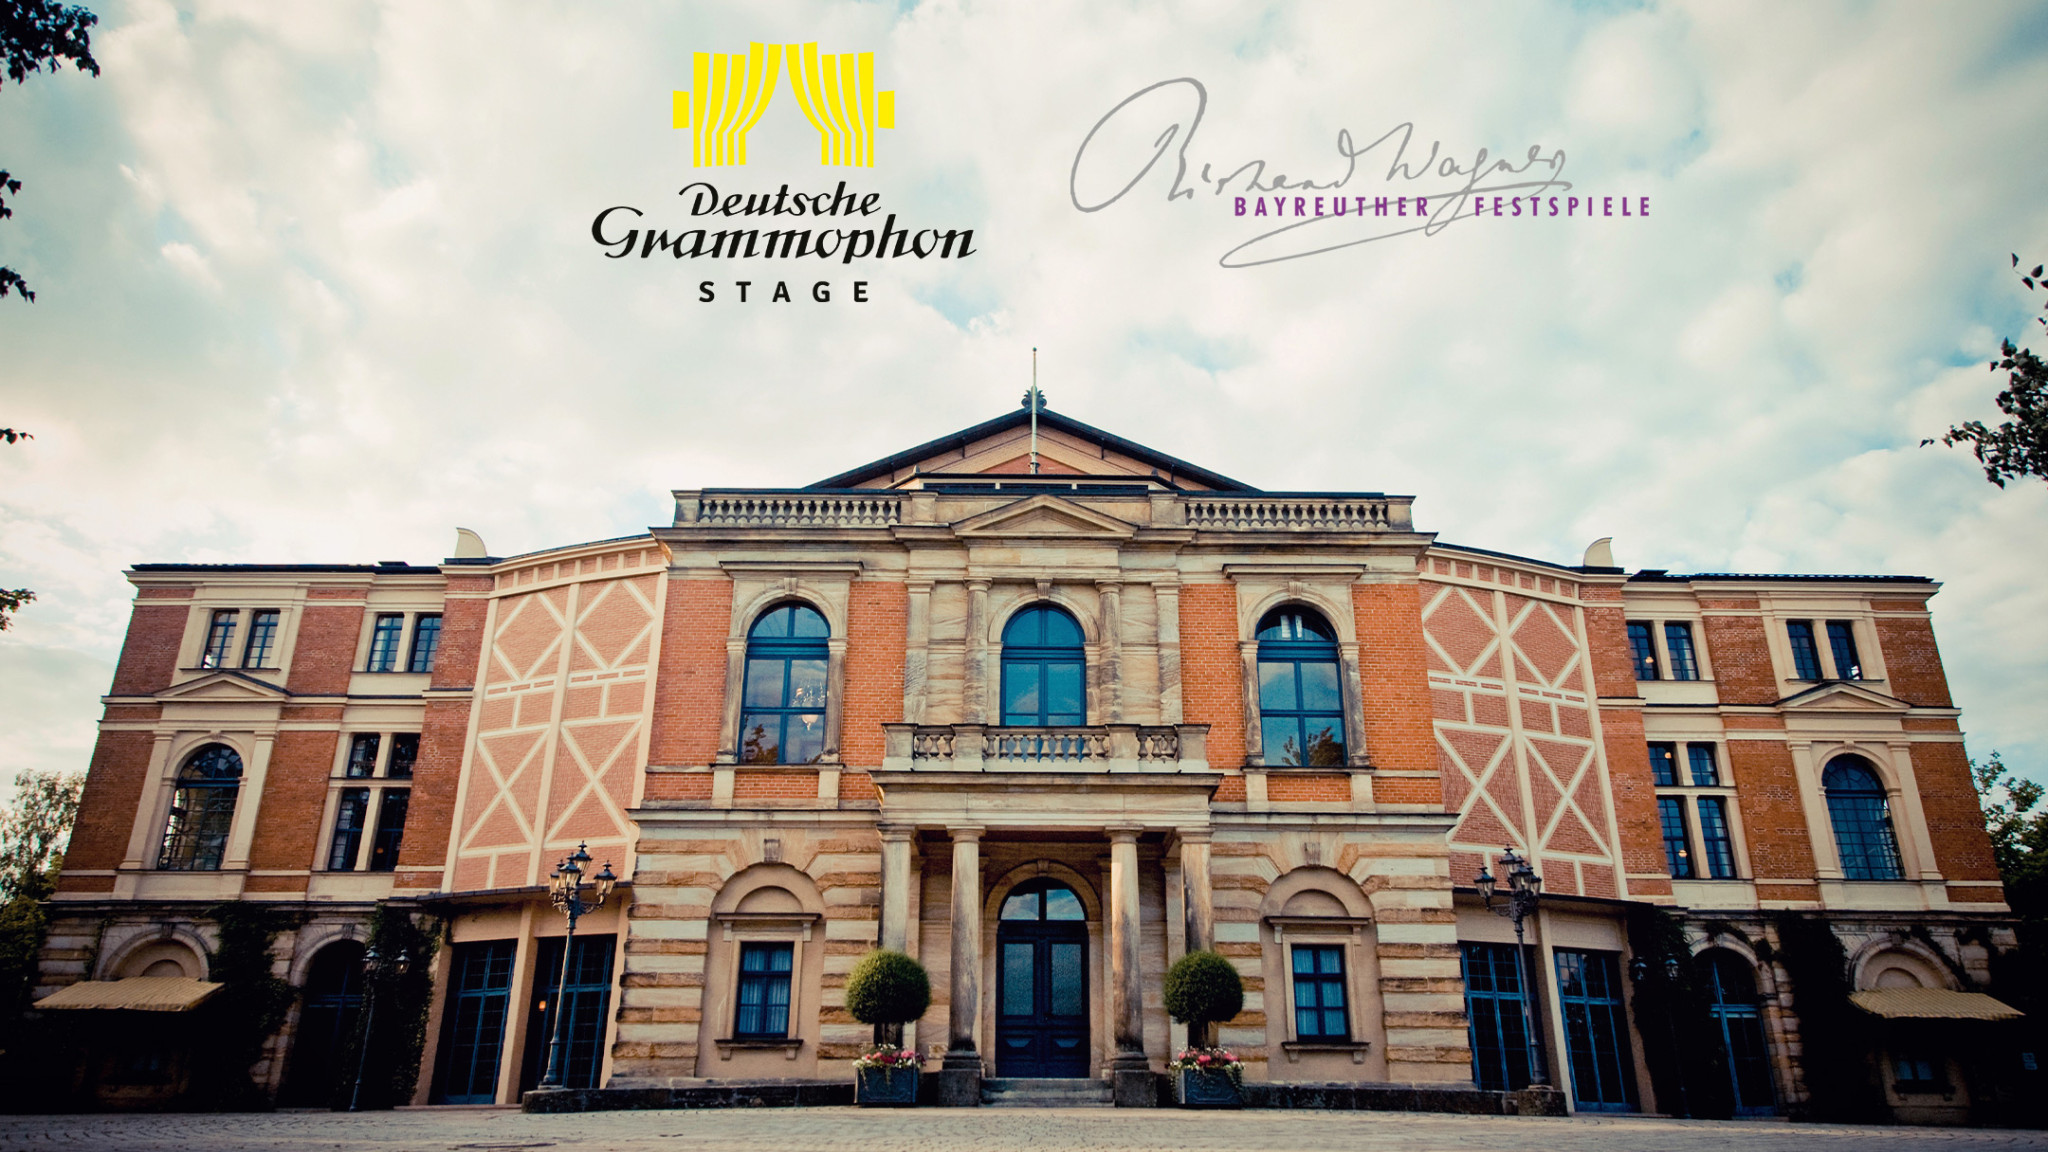 Bayreuth Festival 2020 Programme goes Online in Partnership with Deutsche Grammophon